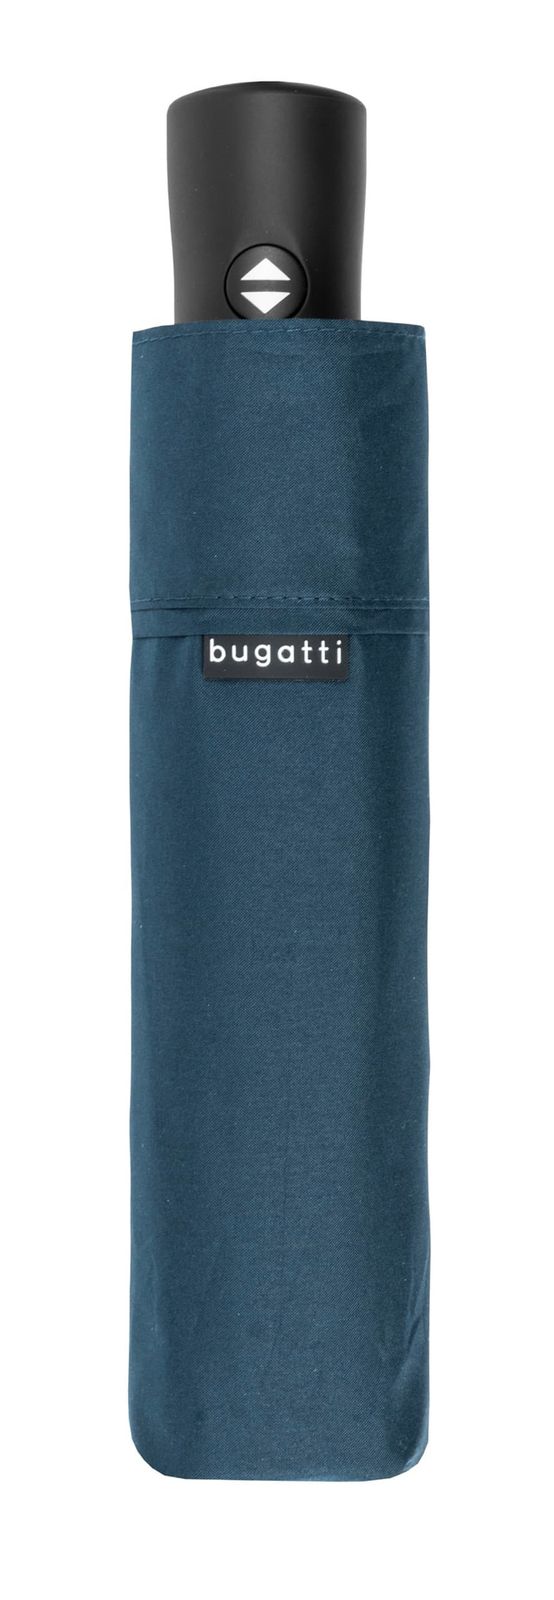 Duo modeherz Blue Crystal | Magic online & accessories Uni bugatti purses Buy bags, | Buddy